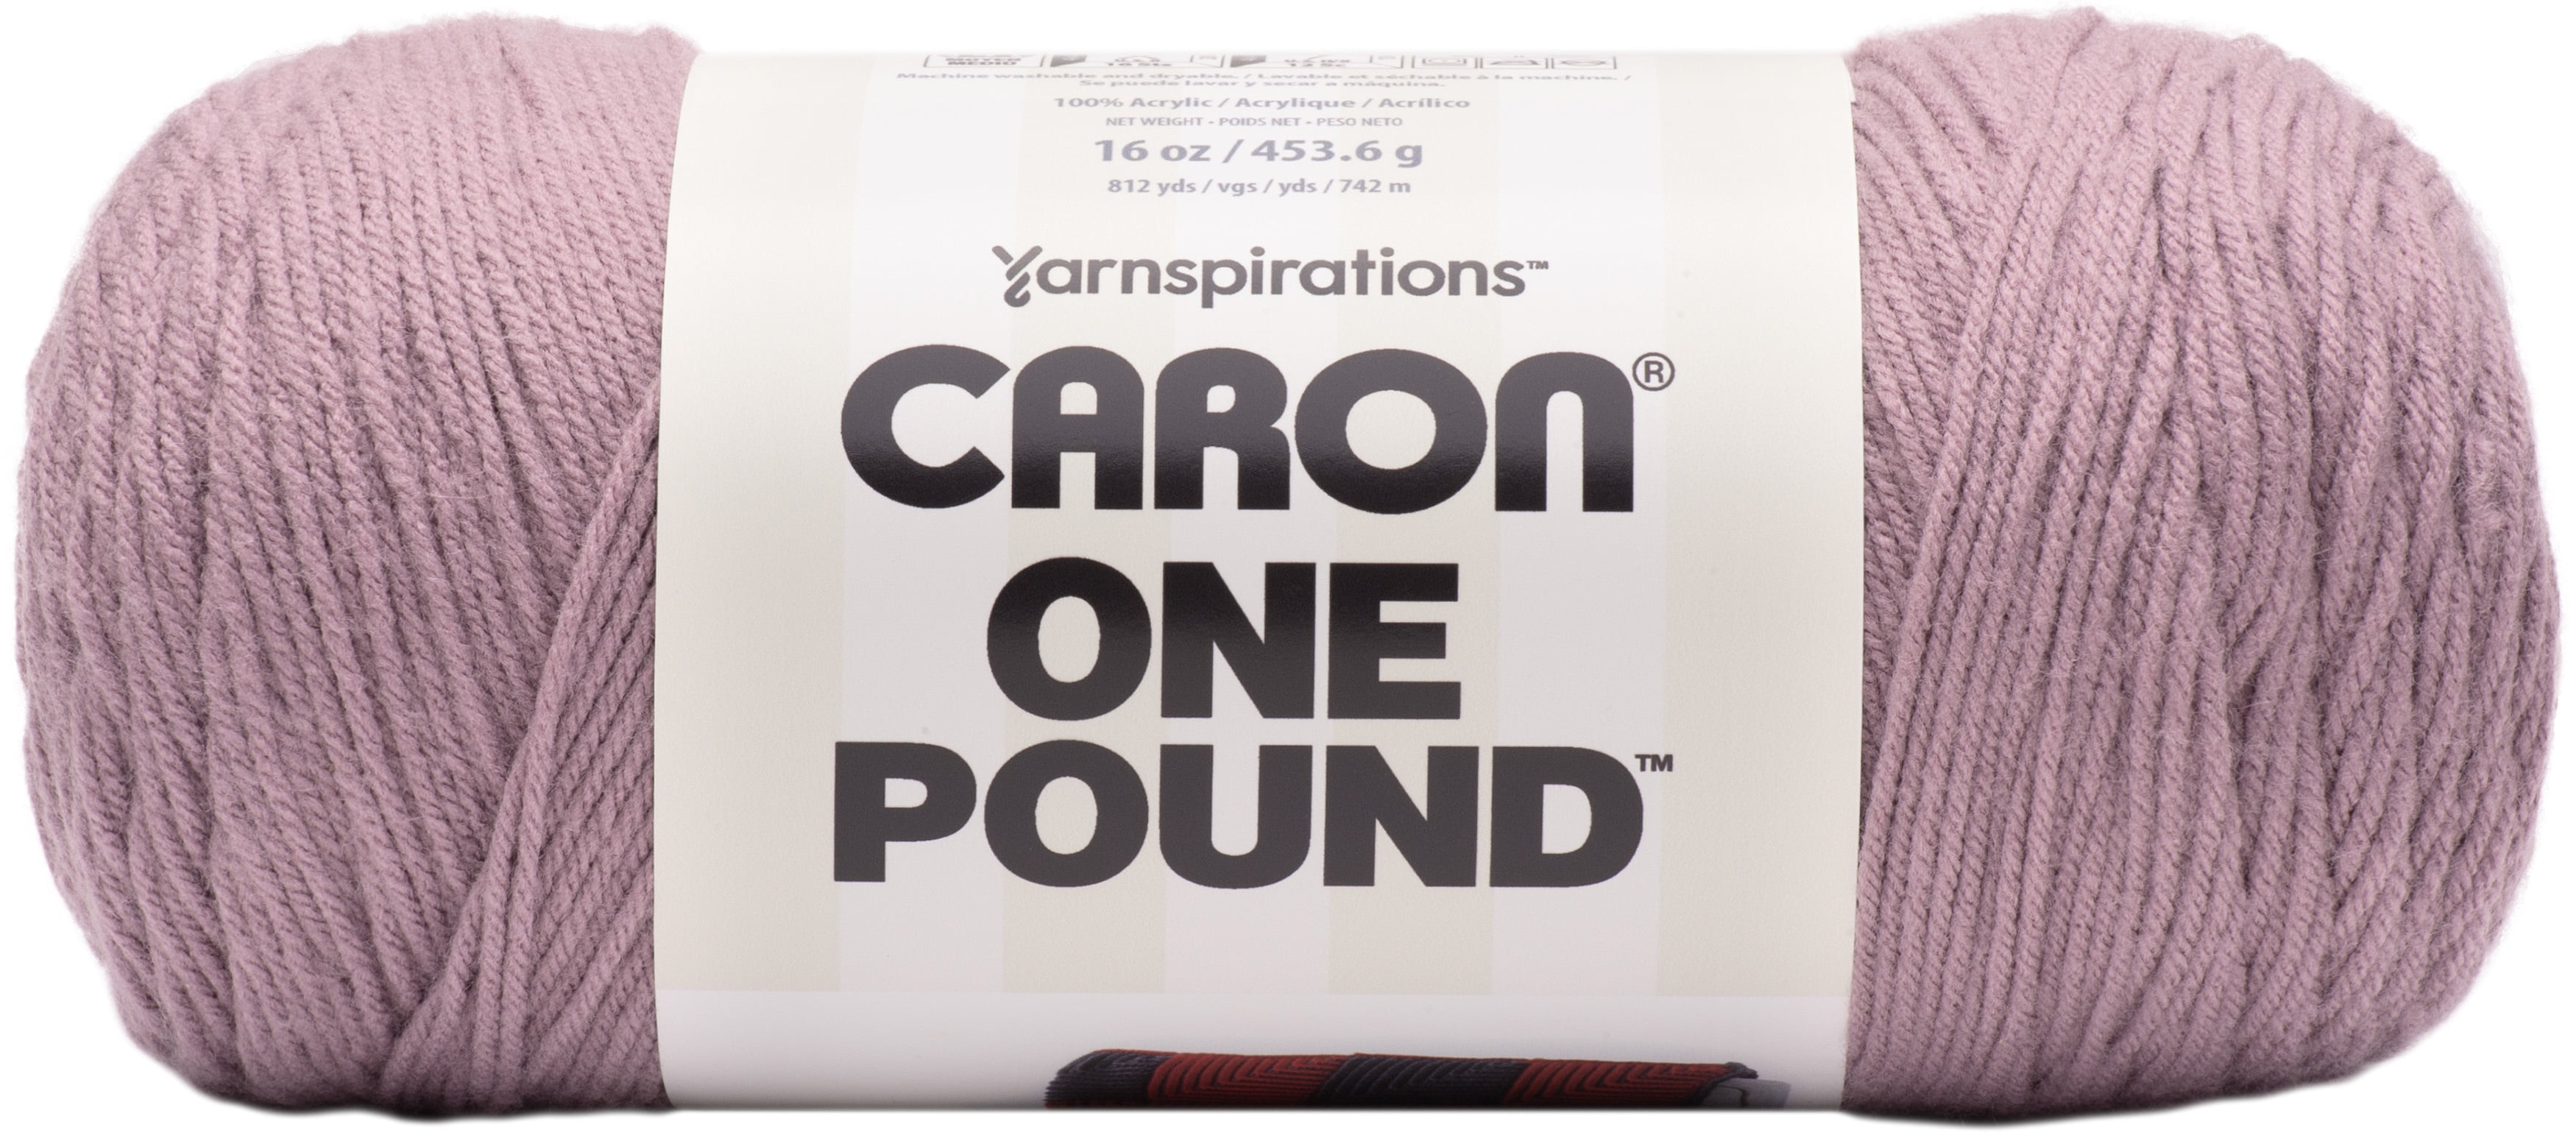 Caron Dove Yarn One Pound